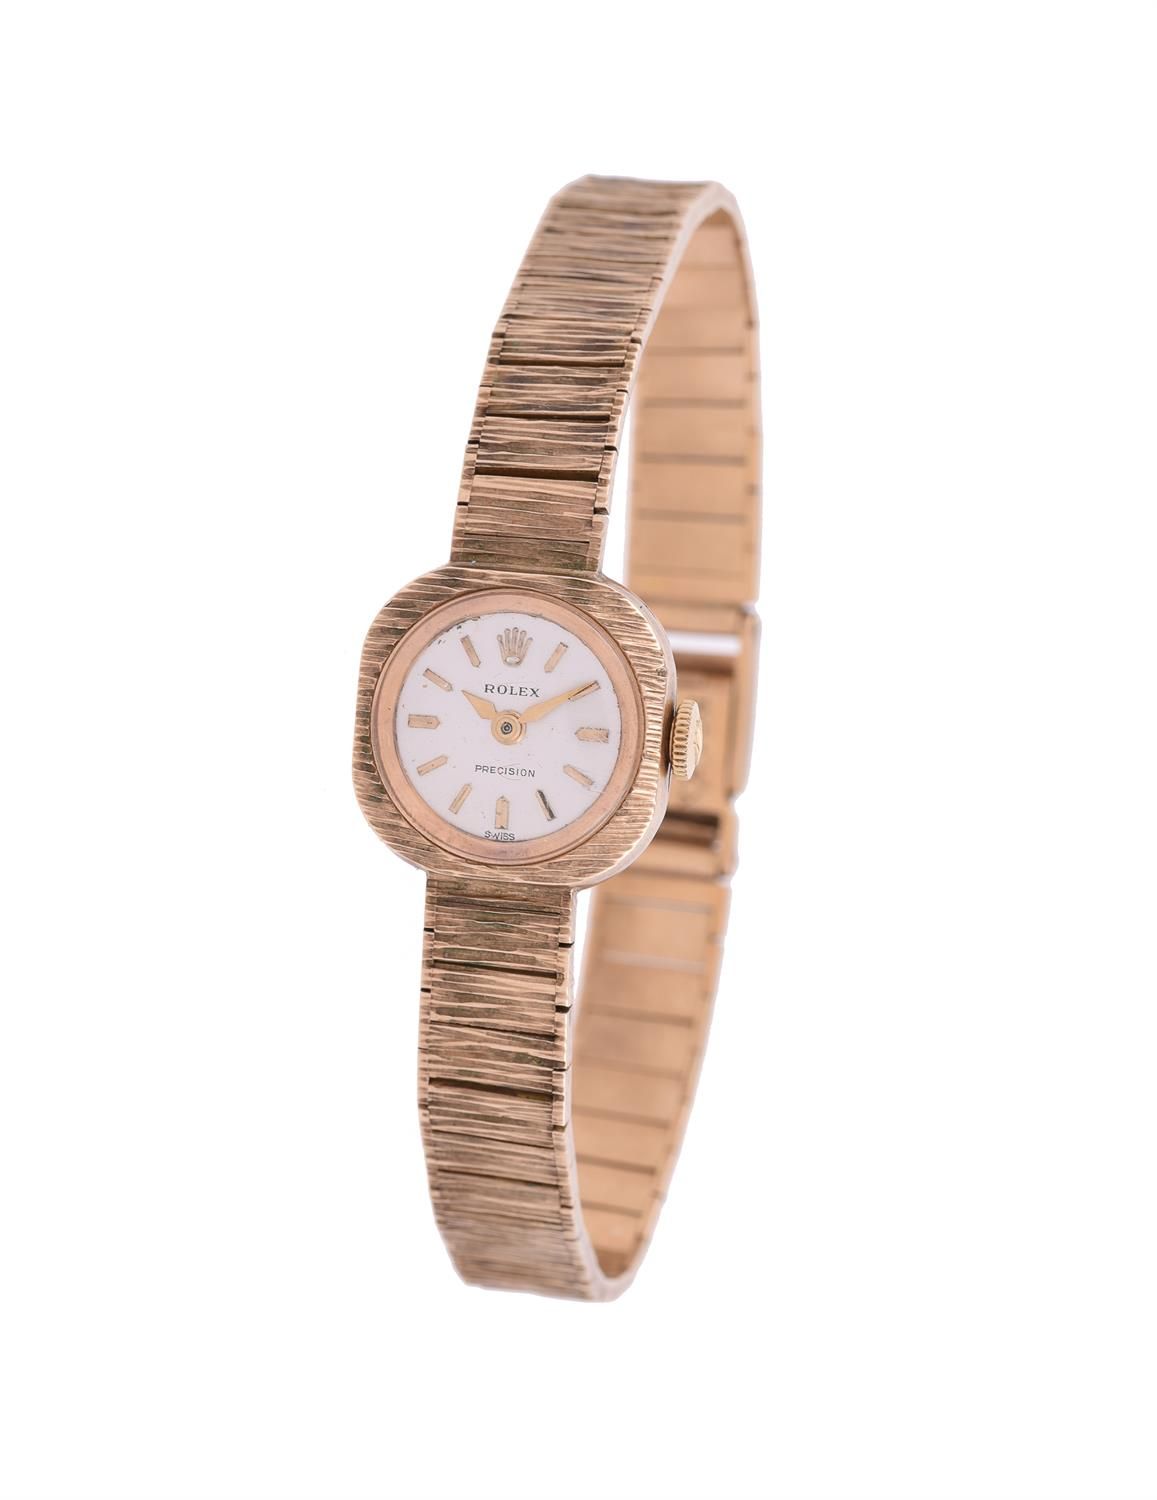 Rolex, Precision, Lady's 9 carat gold bracelet watch Rolex, Precision, orologio &hellip;